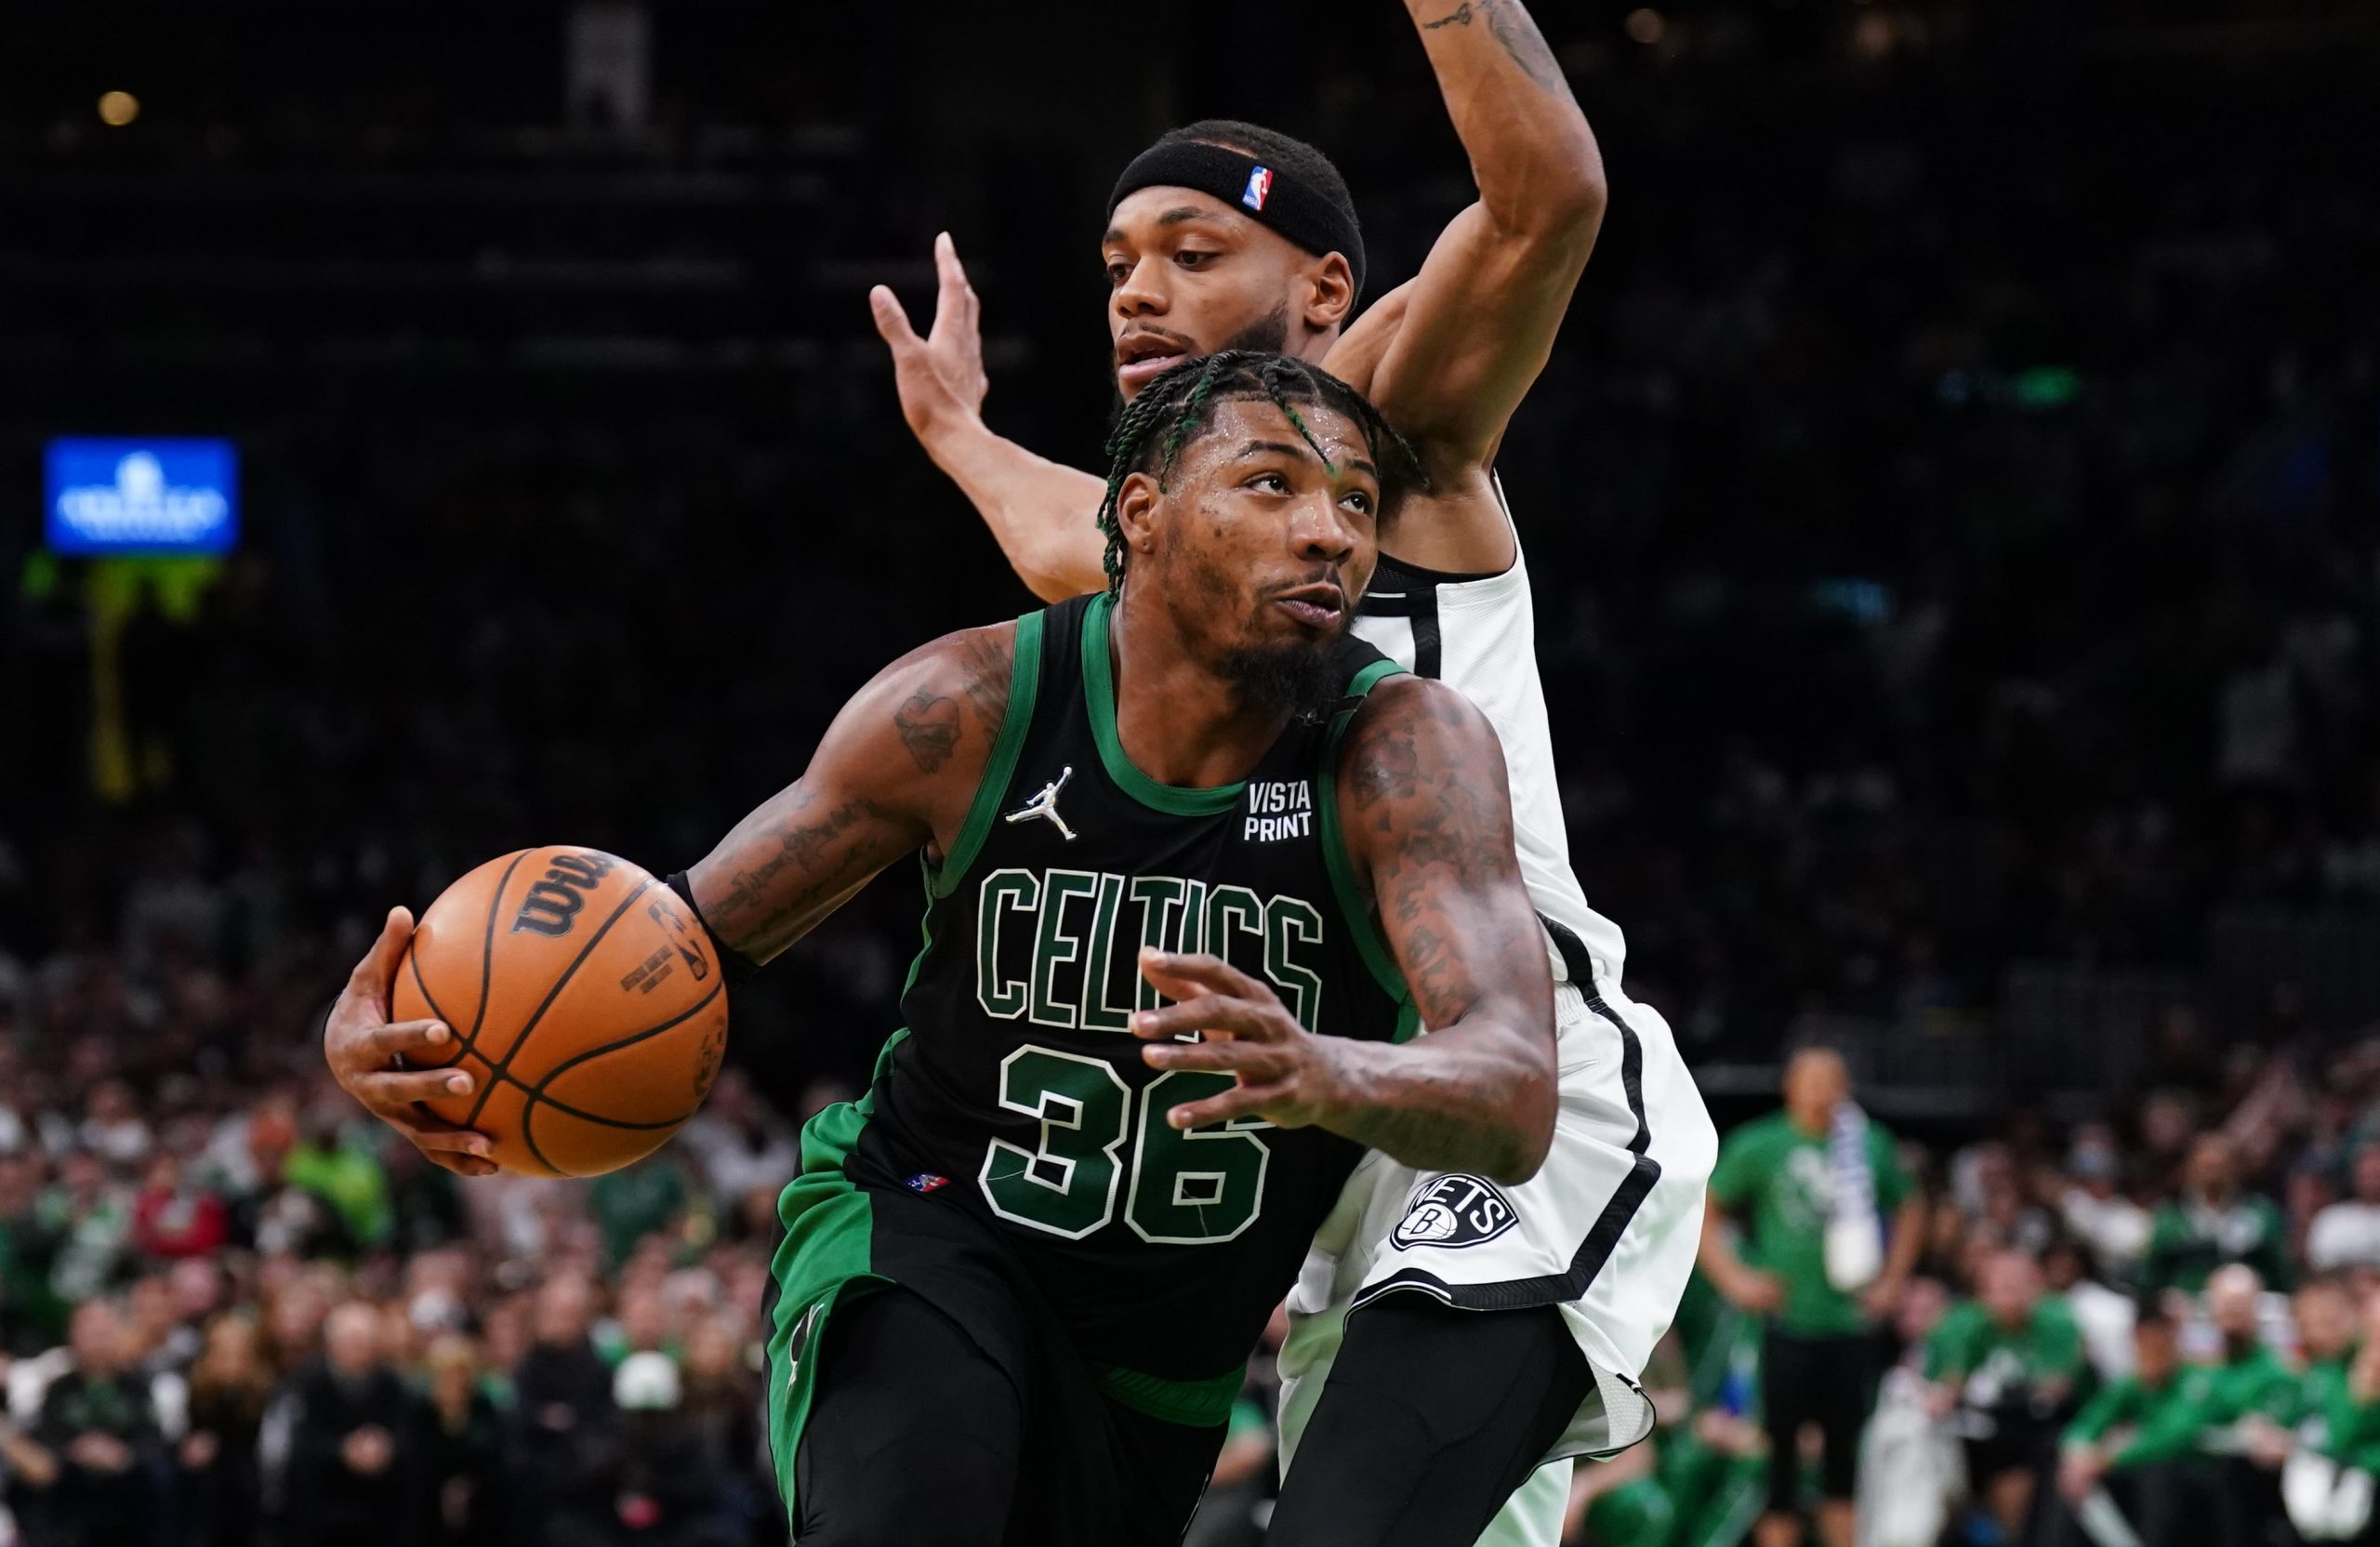 Celtics point guard Marcus Smart